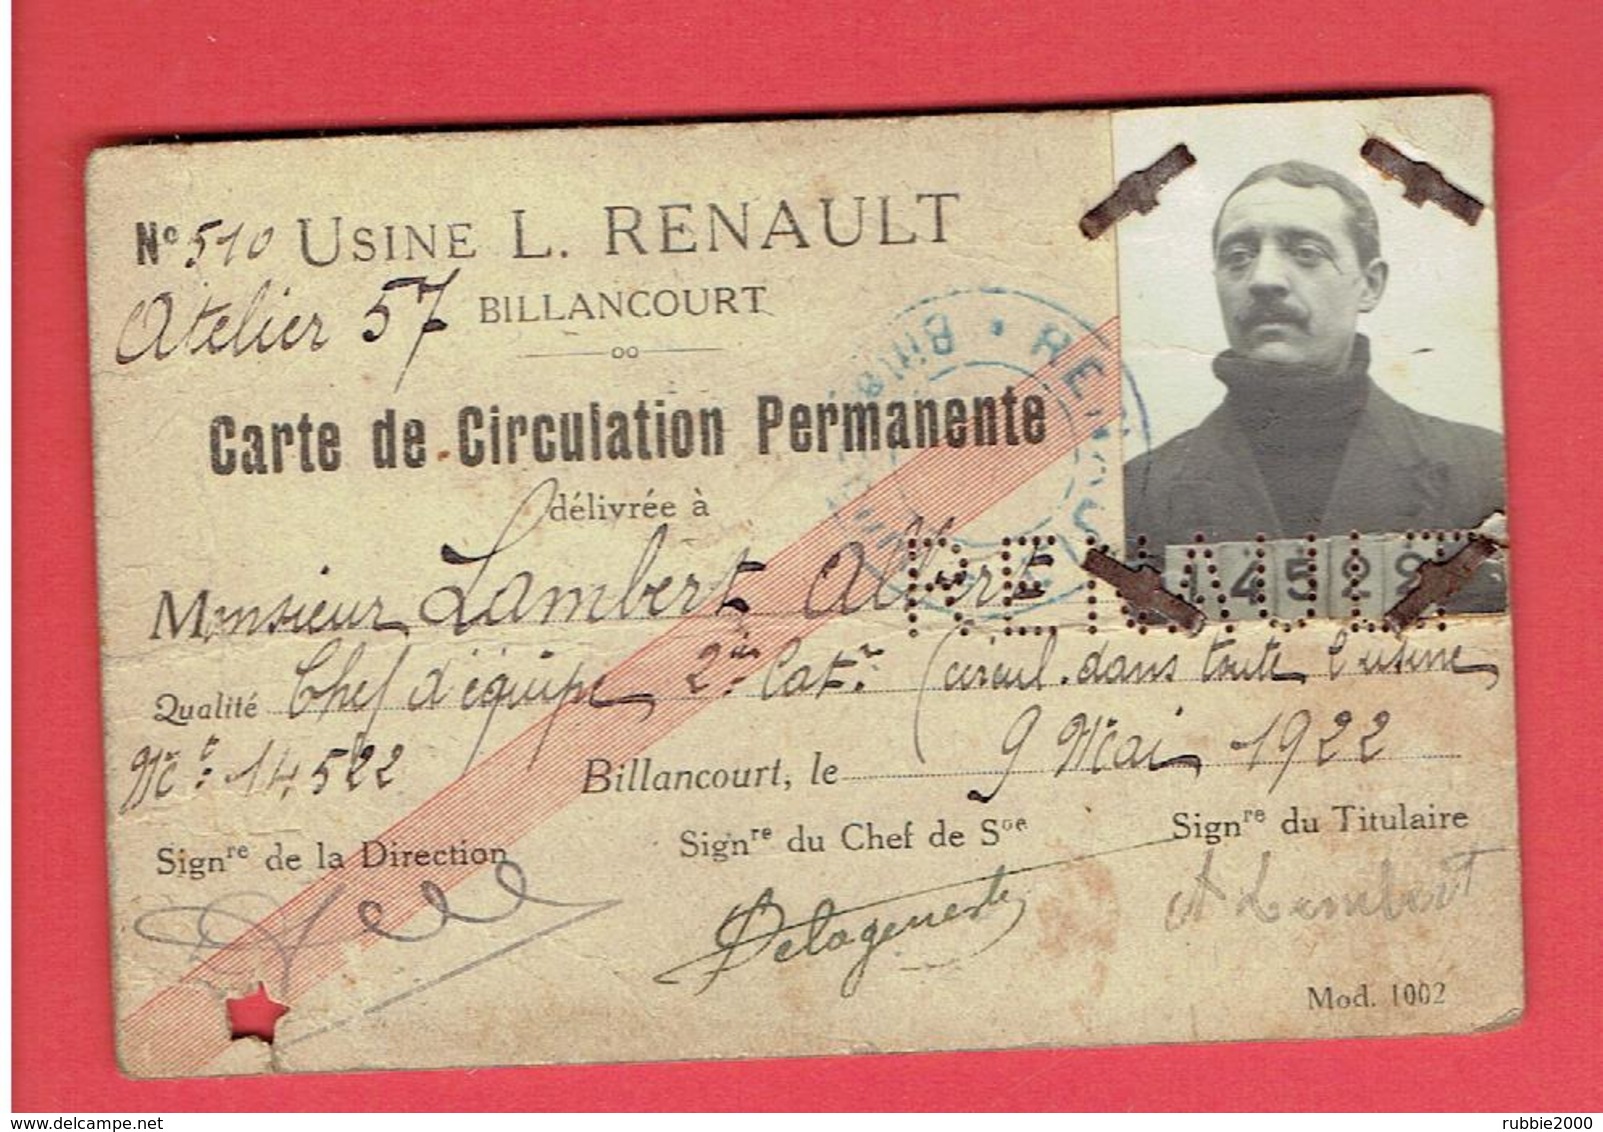 USINE L. RENAULT BILLANCOURT CARTE DE CIRCULATION PERMANENTE DE LAMBERT ALBERT DANS TOUTE L USINE 1922 - Cars